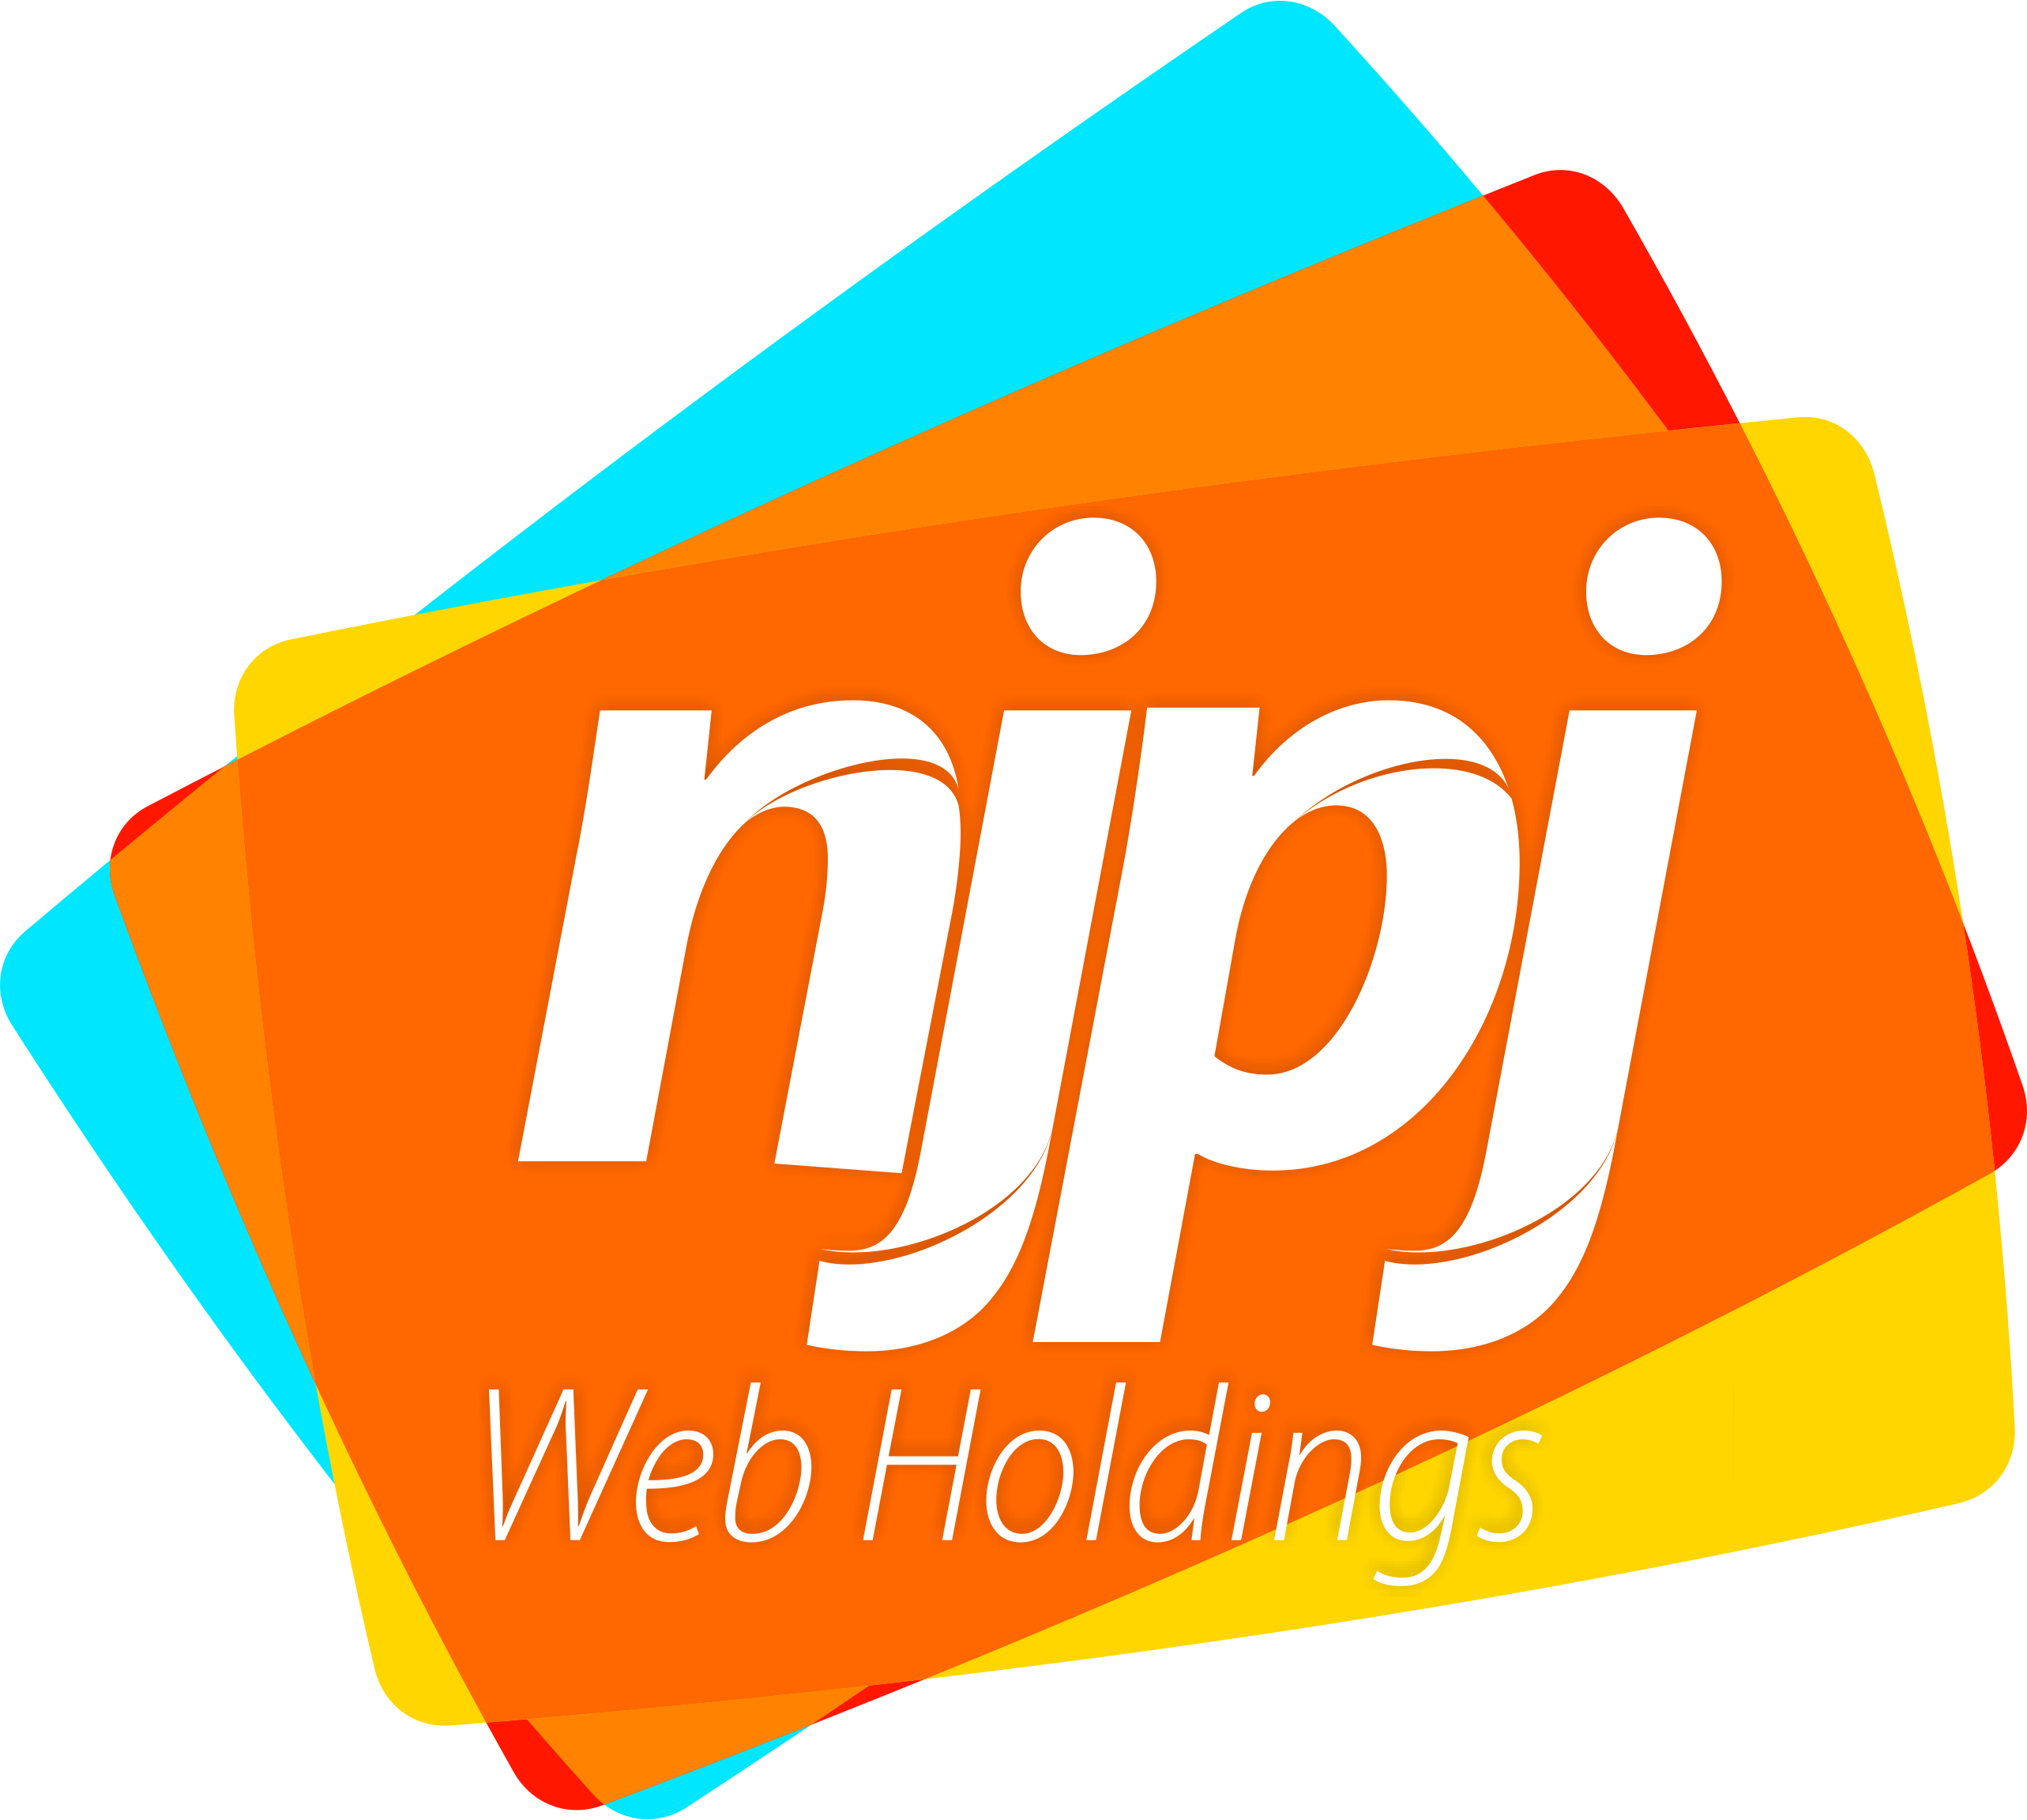 NJPJ Web Holdings